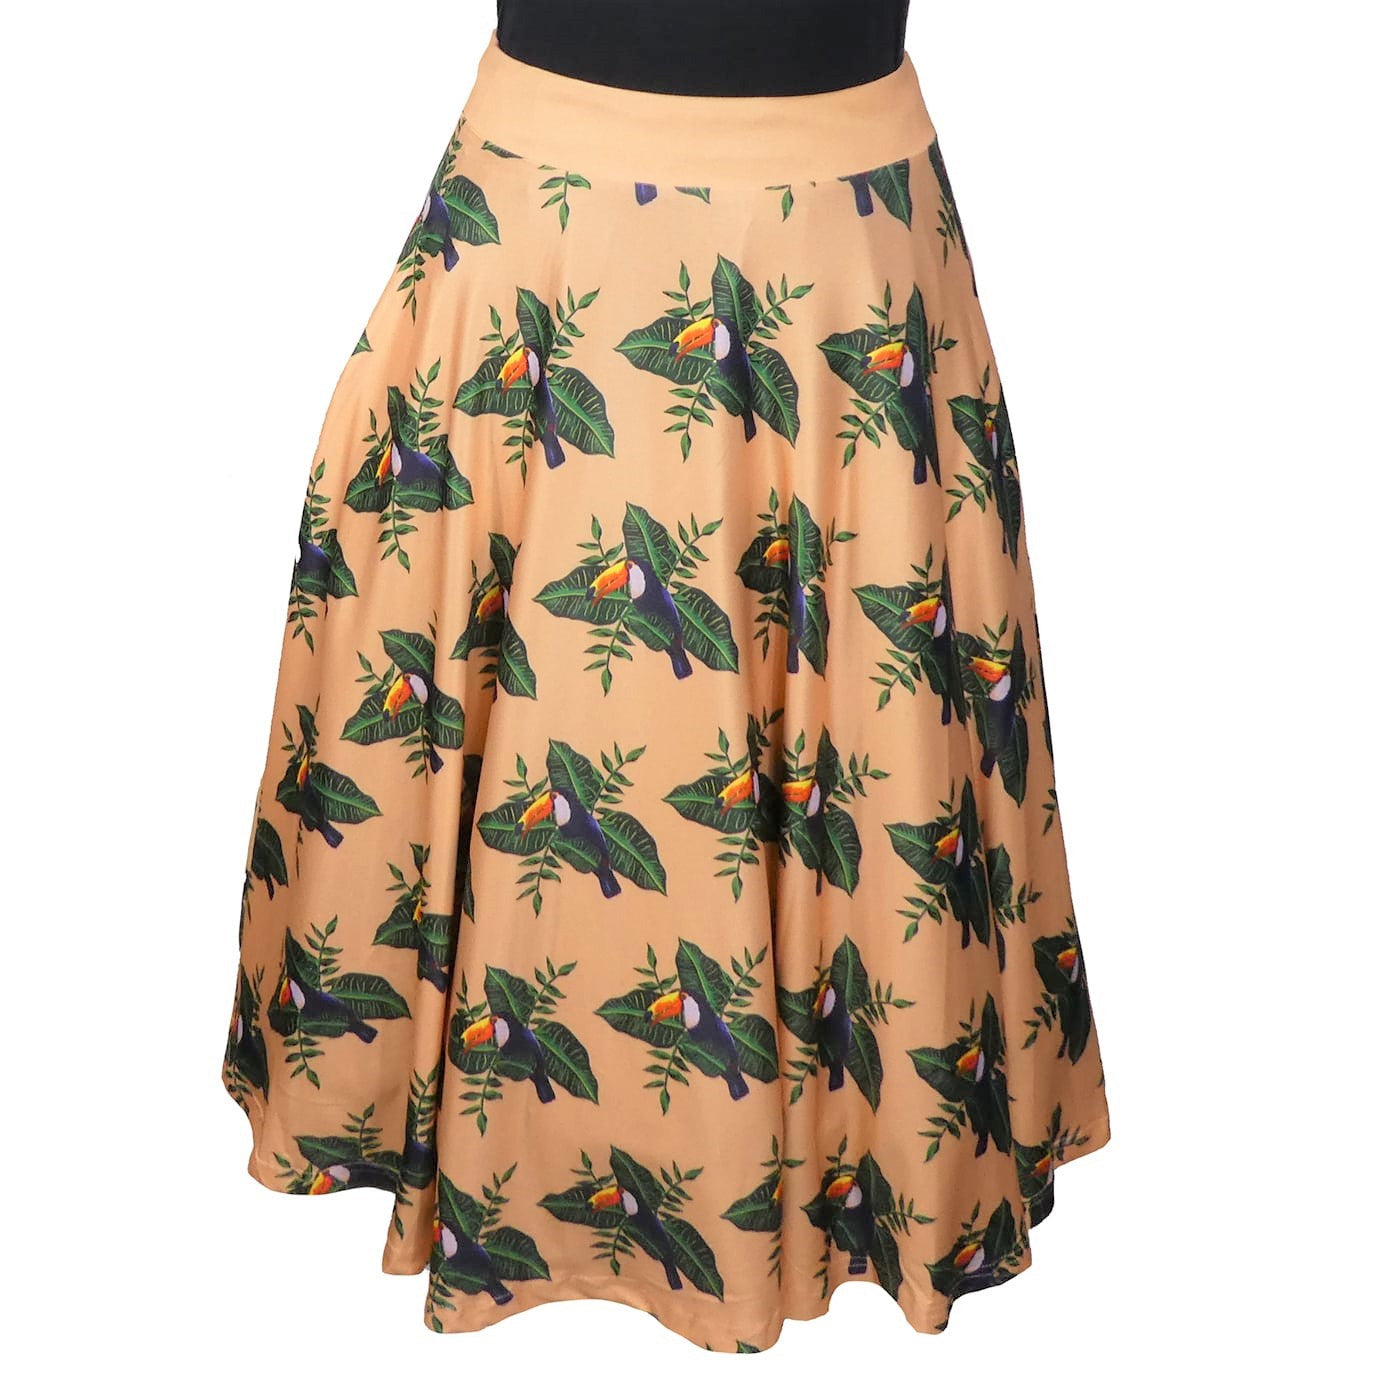 Paradise Swishy Skirt by RainbowsAndFairies.com.au (Toucan - Jungle - Skirt With Pockets - Circle Skirt - Vintage Inspired - Mod Retro - Animal Print) - SKU: CL_SWISH_PARAD_ORG - Pic-01